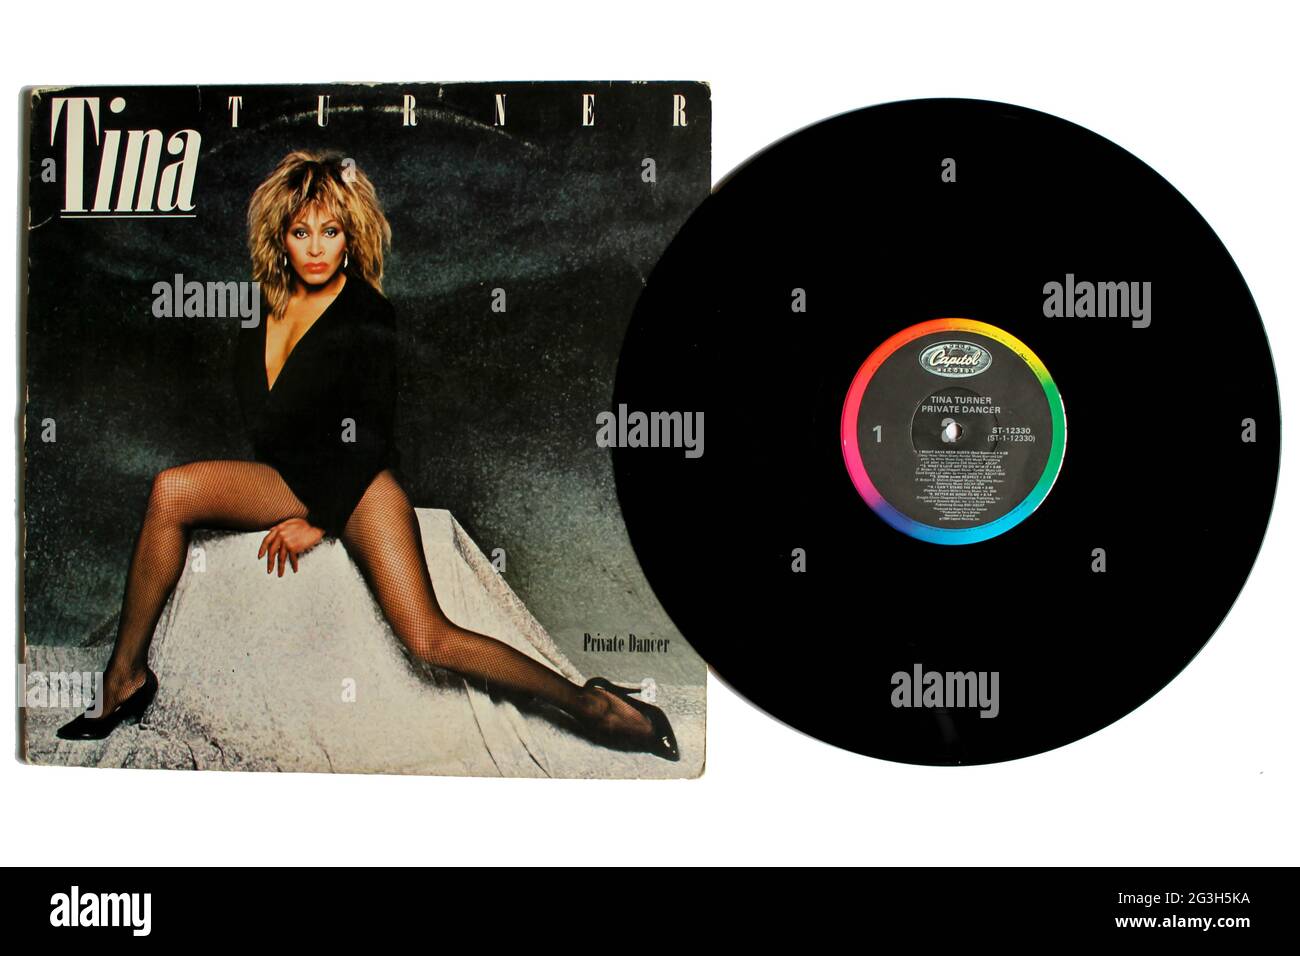 Pop, rock and RnB artist, Tina Turner music album on vinyl record LP disc. Titled: Private Dancer album cover Stock Photo